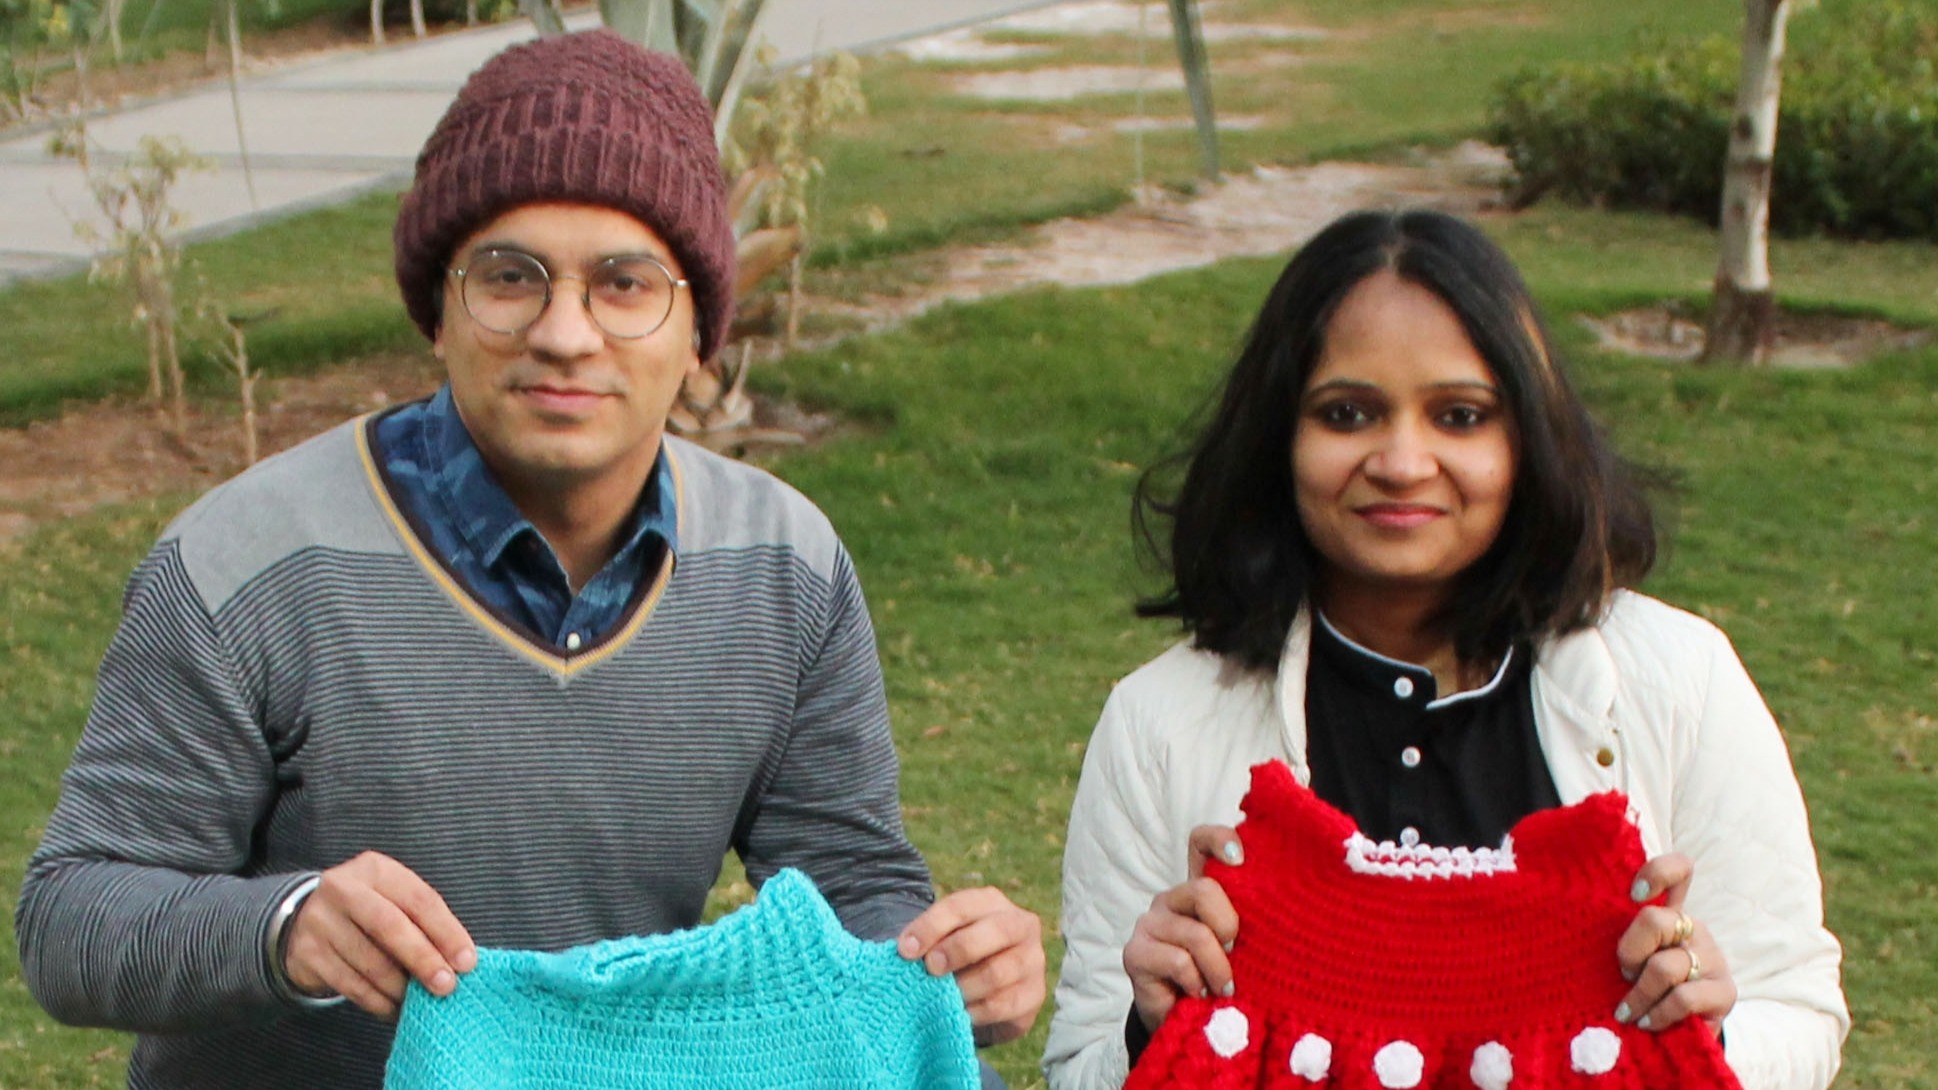 Knitting Little Dreams And Joy Through Her Crochet, Sonipat Based Motherpreneur Making It Big